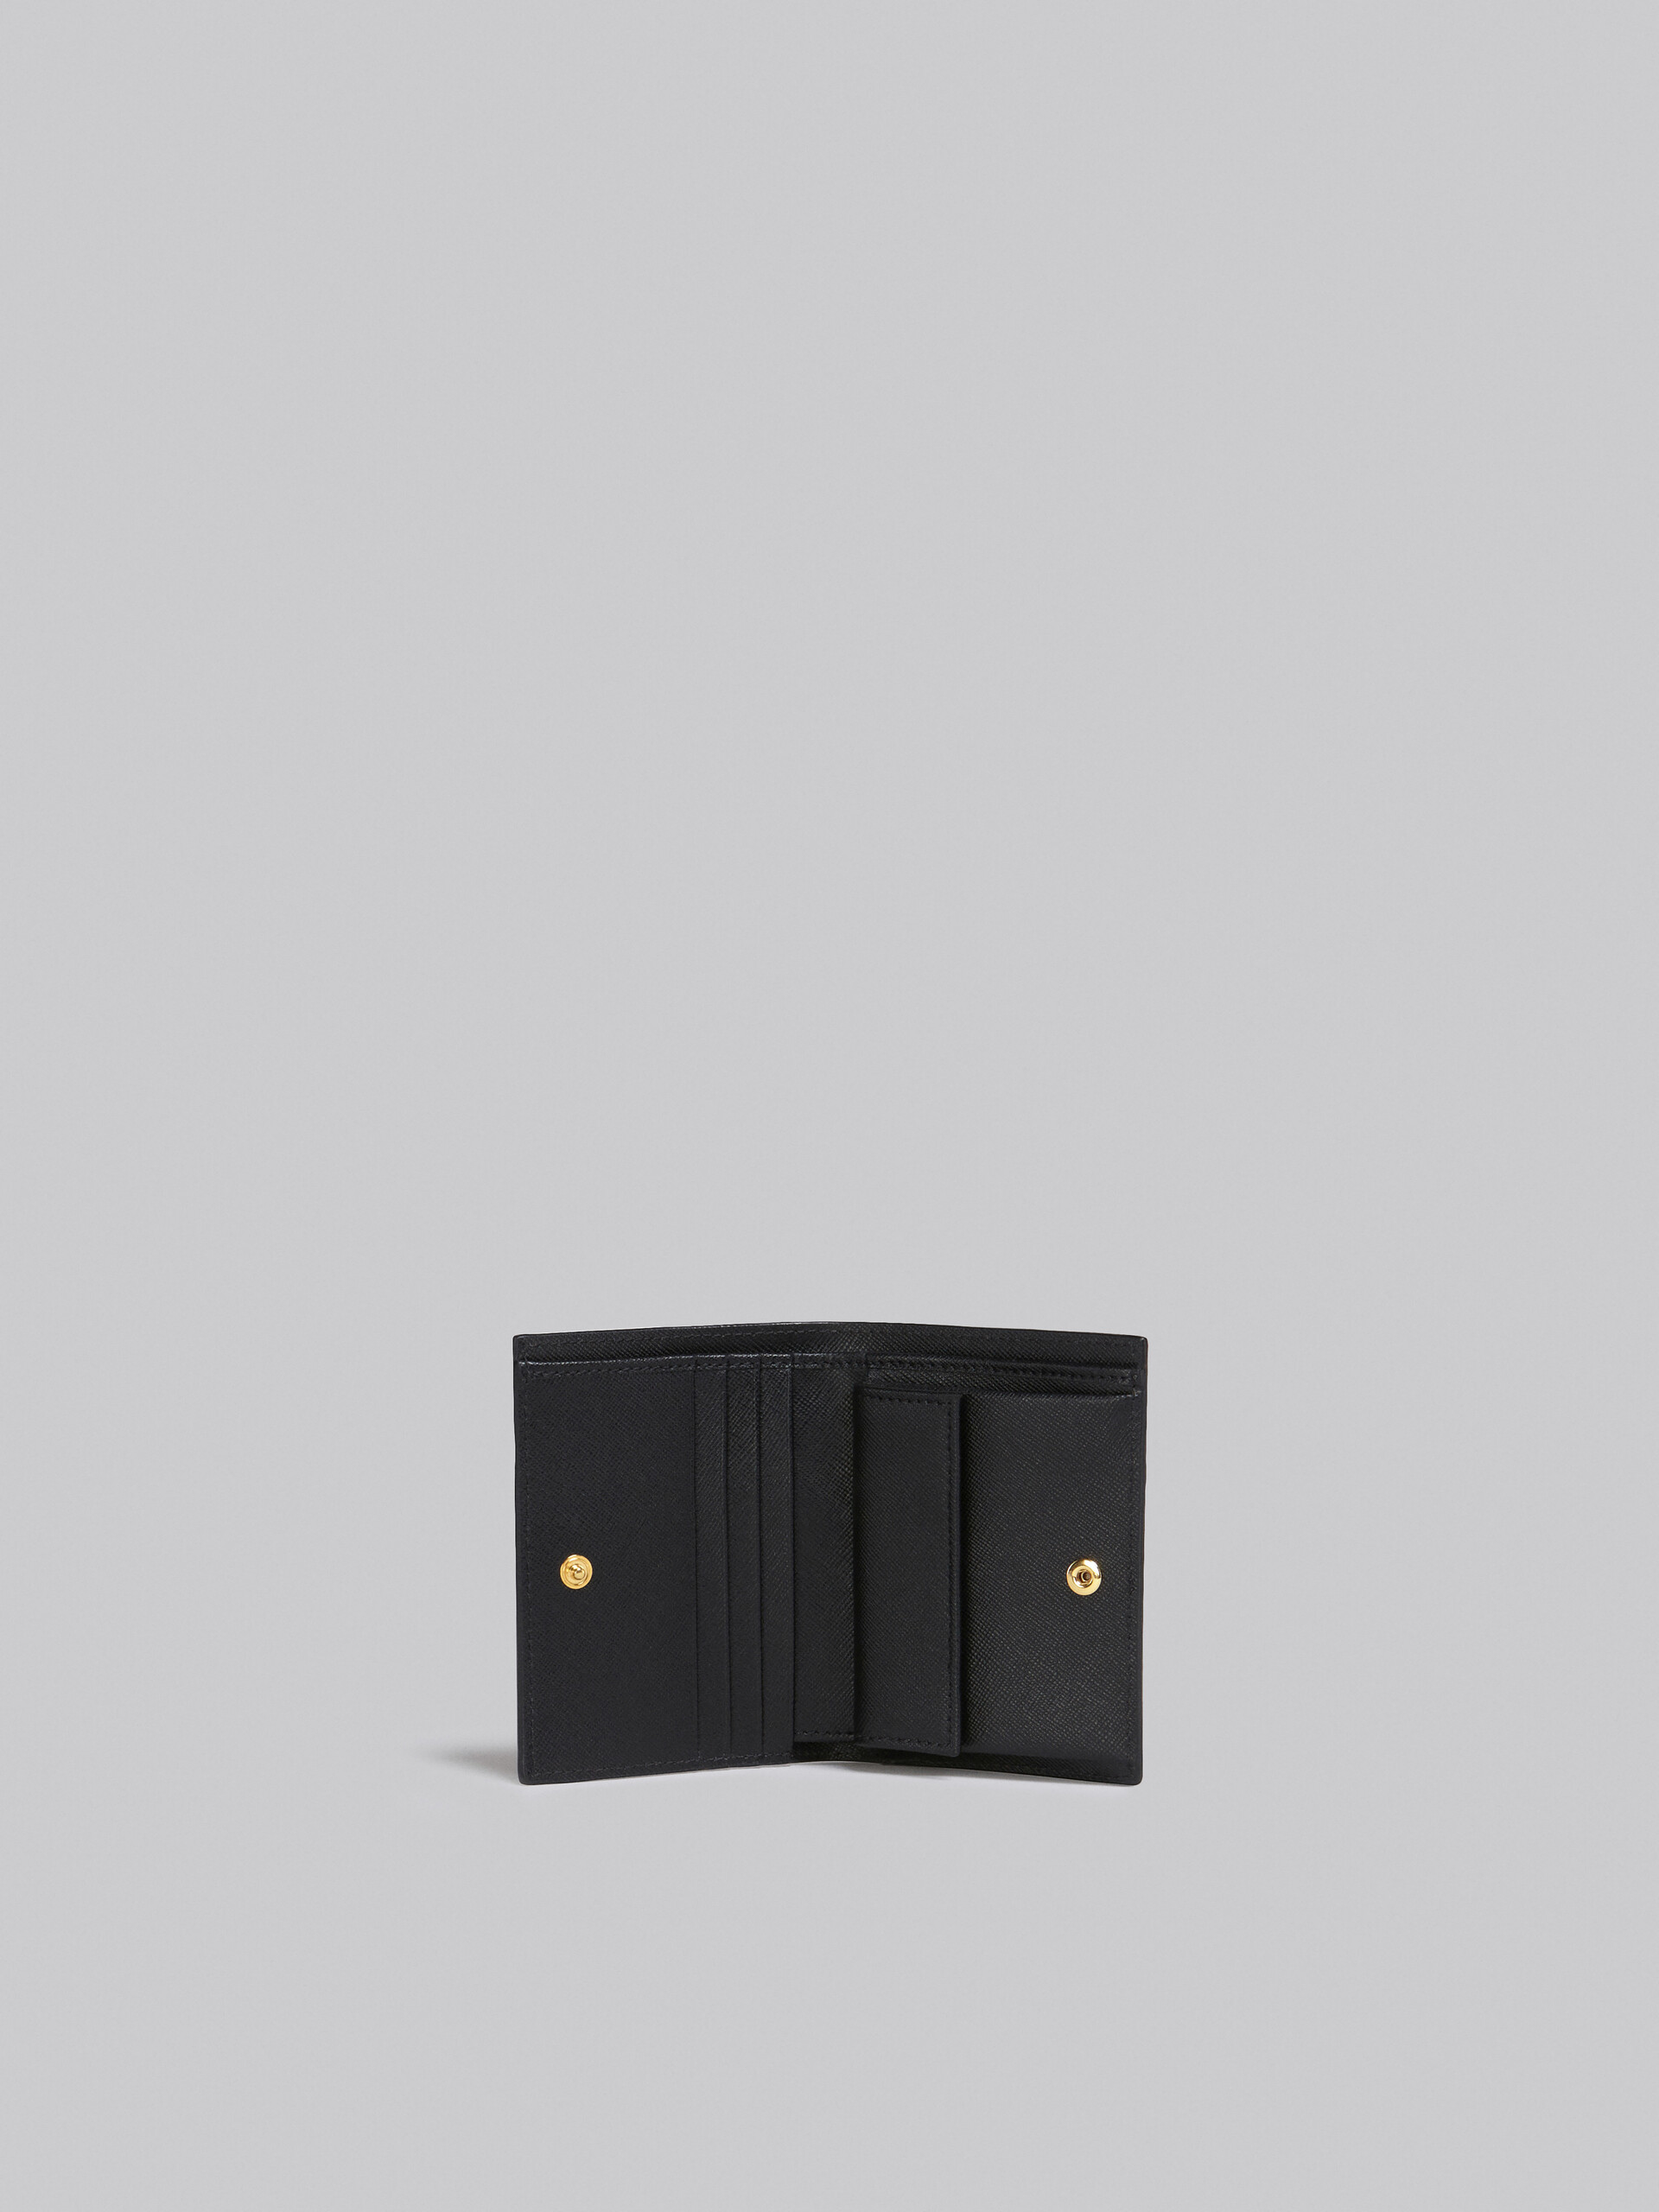 Prada Small Saffiano Leather Wallet on SALE